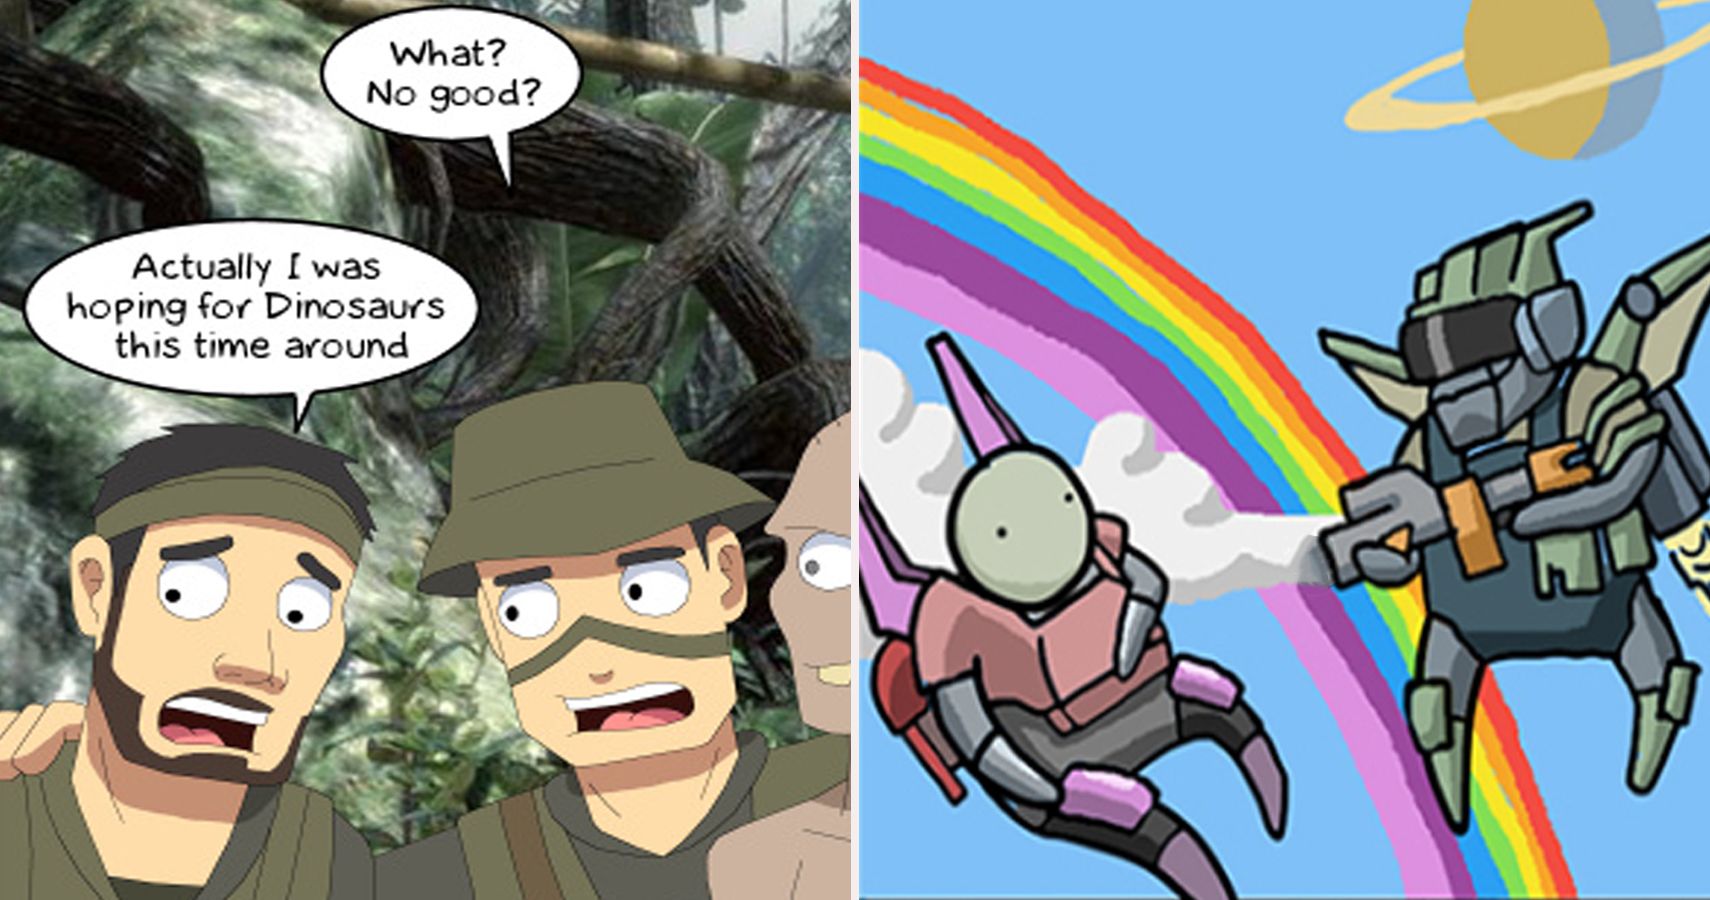 A Rainbow Friends/Doors meme. (ORIGINAL) - Imgflip